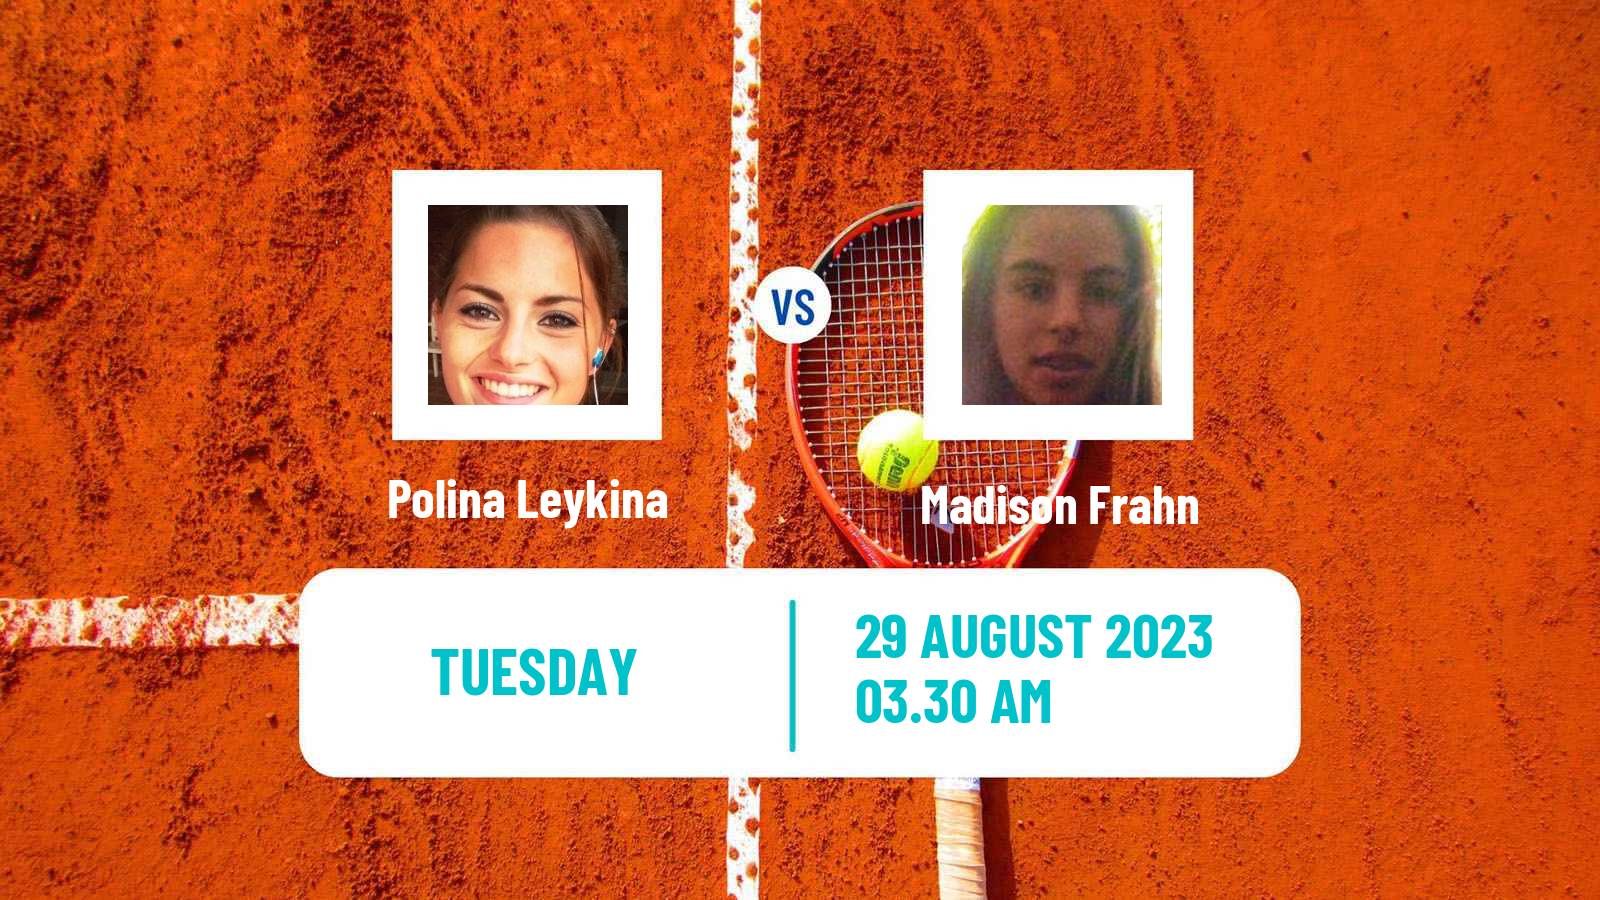 Tennis ITF W15 Baku 2 Women Polina Leykina - Madison Frahn